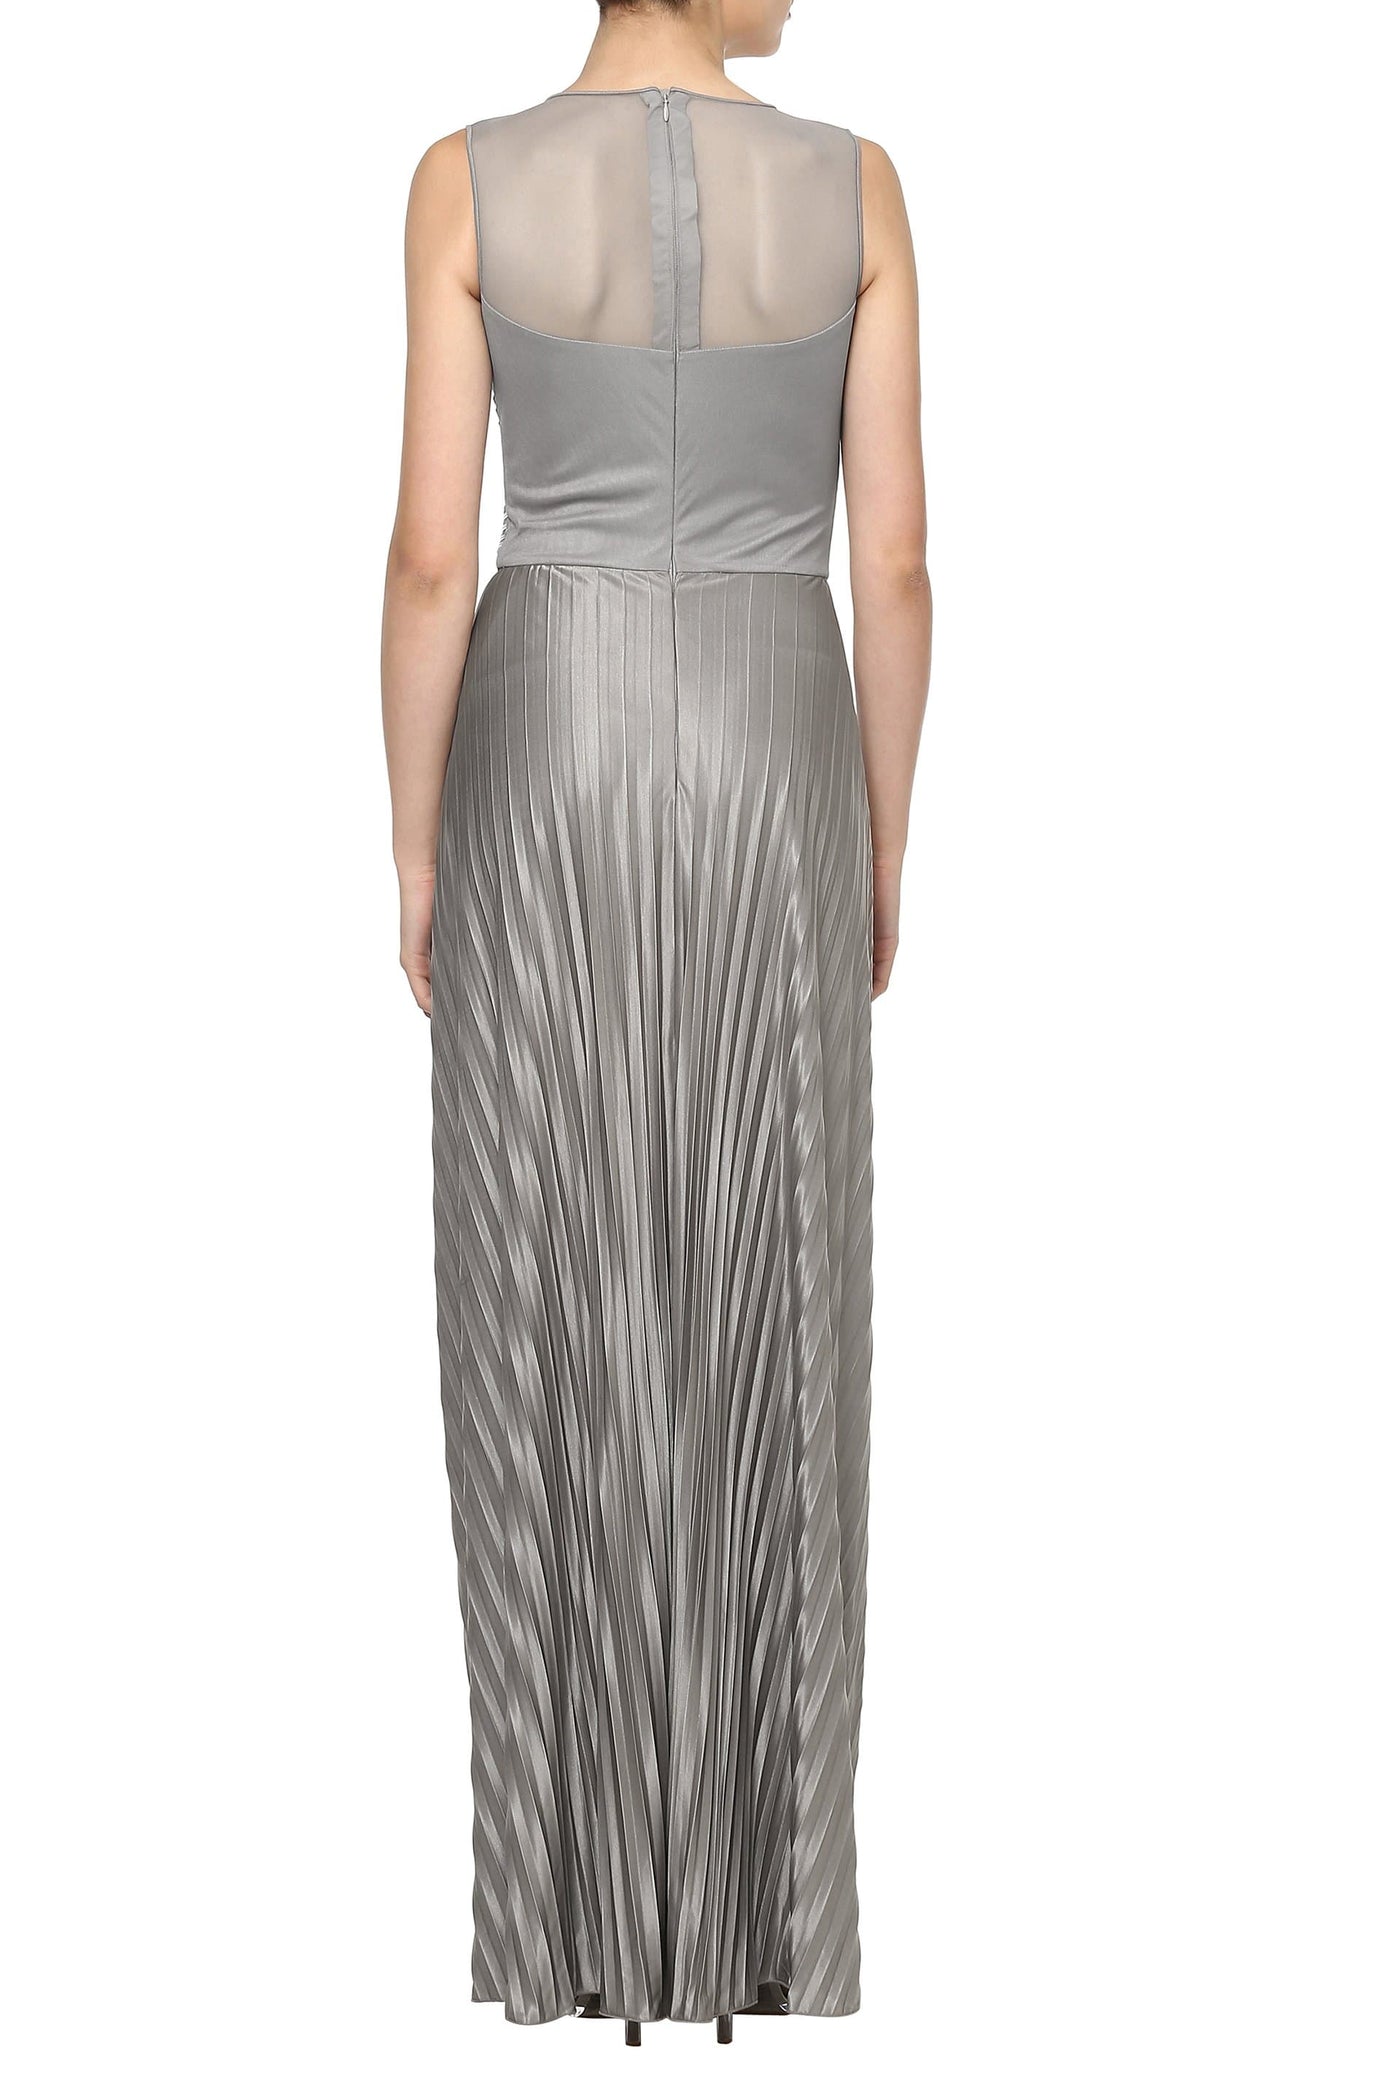 Silver Draped Dress With Metallic Polymer